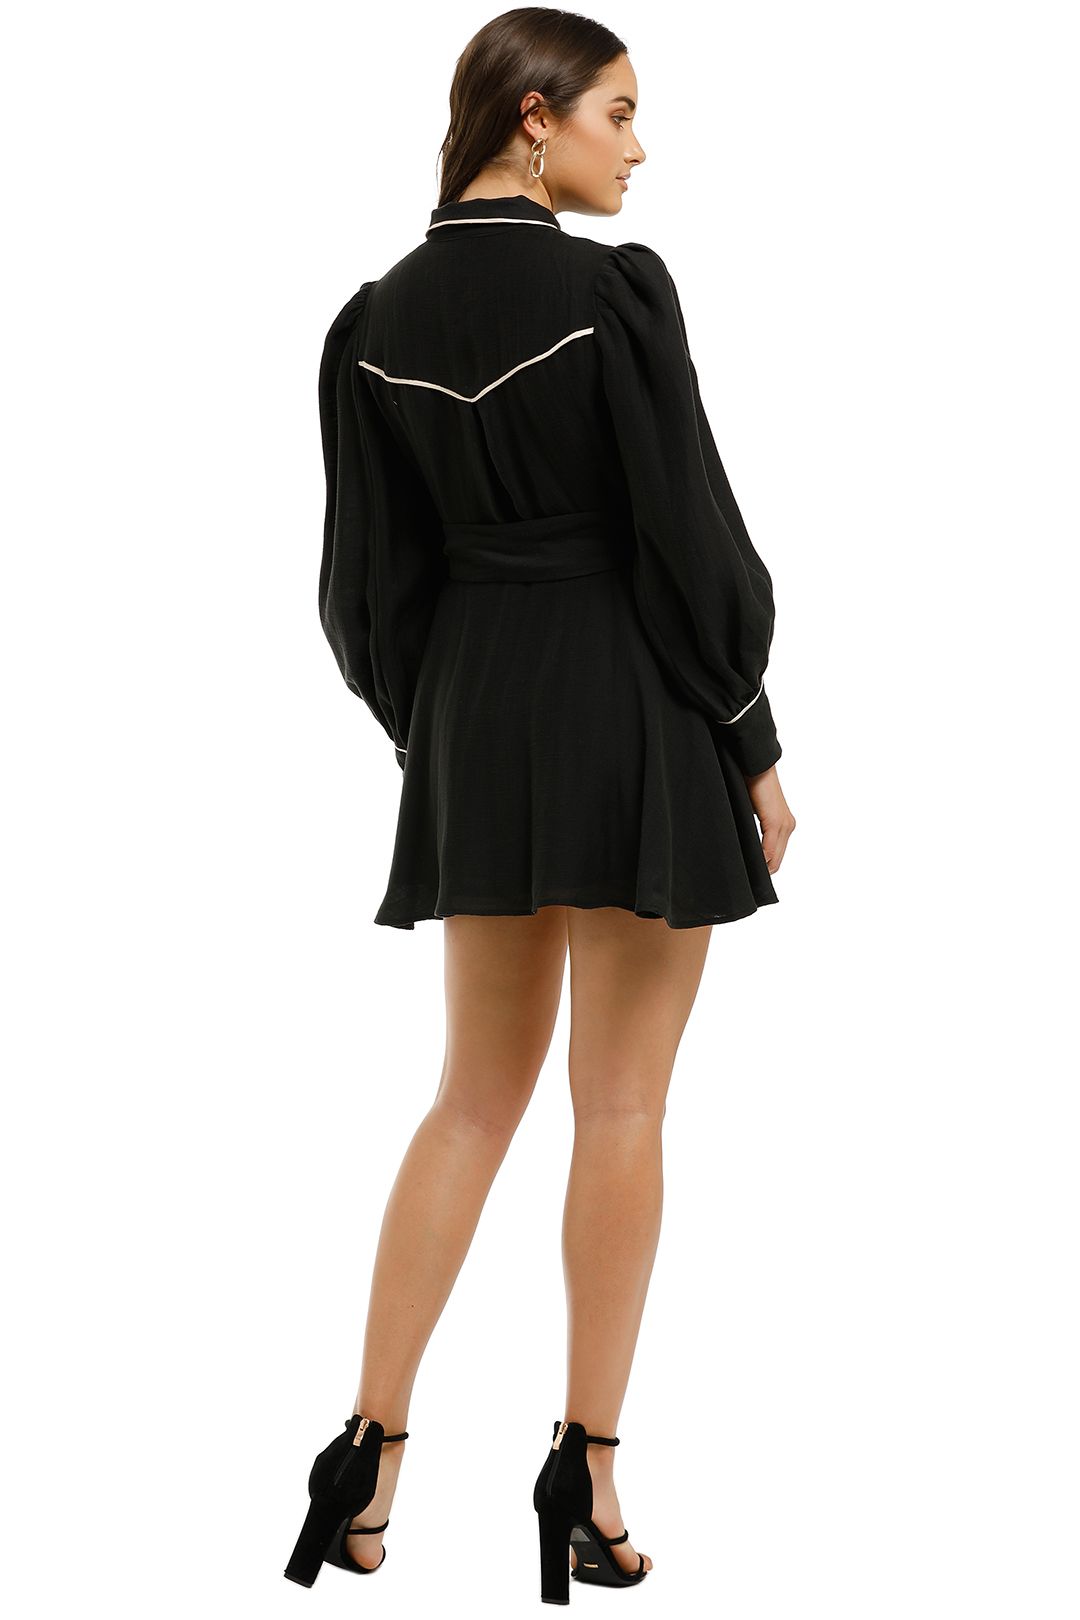 CMEO-Collective-Nearby-Mini-Dress-Black-Back